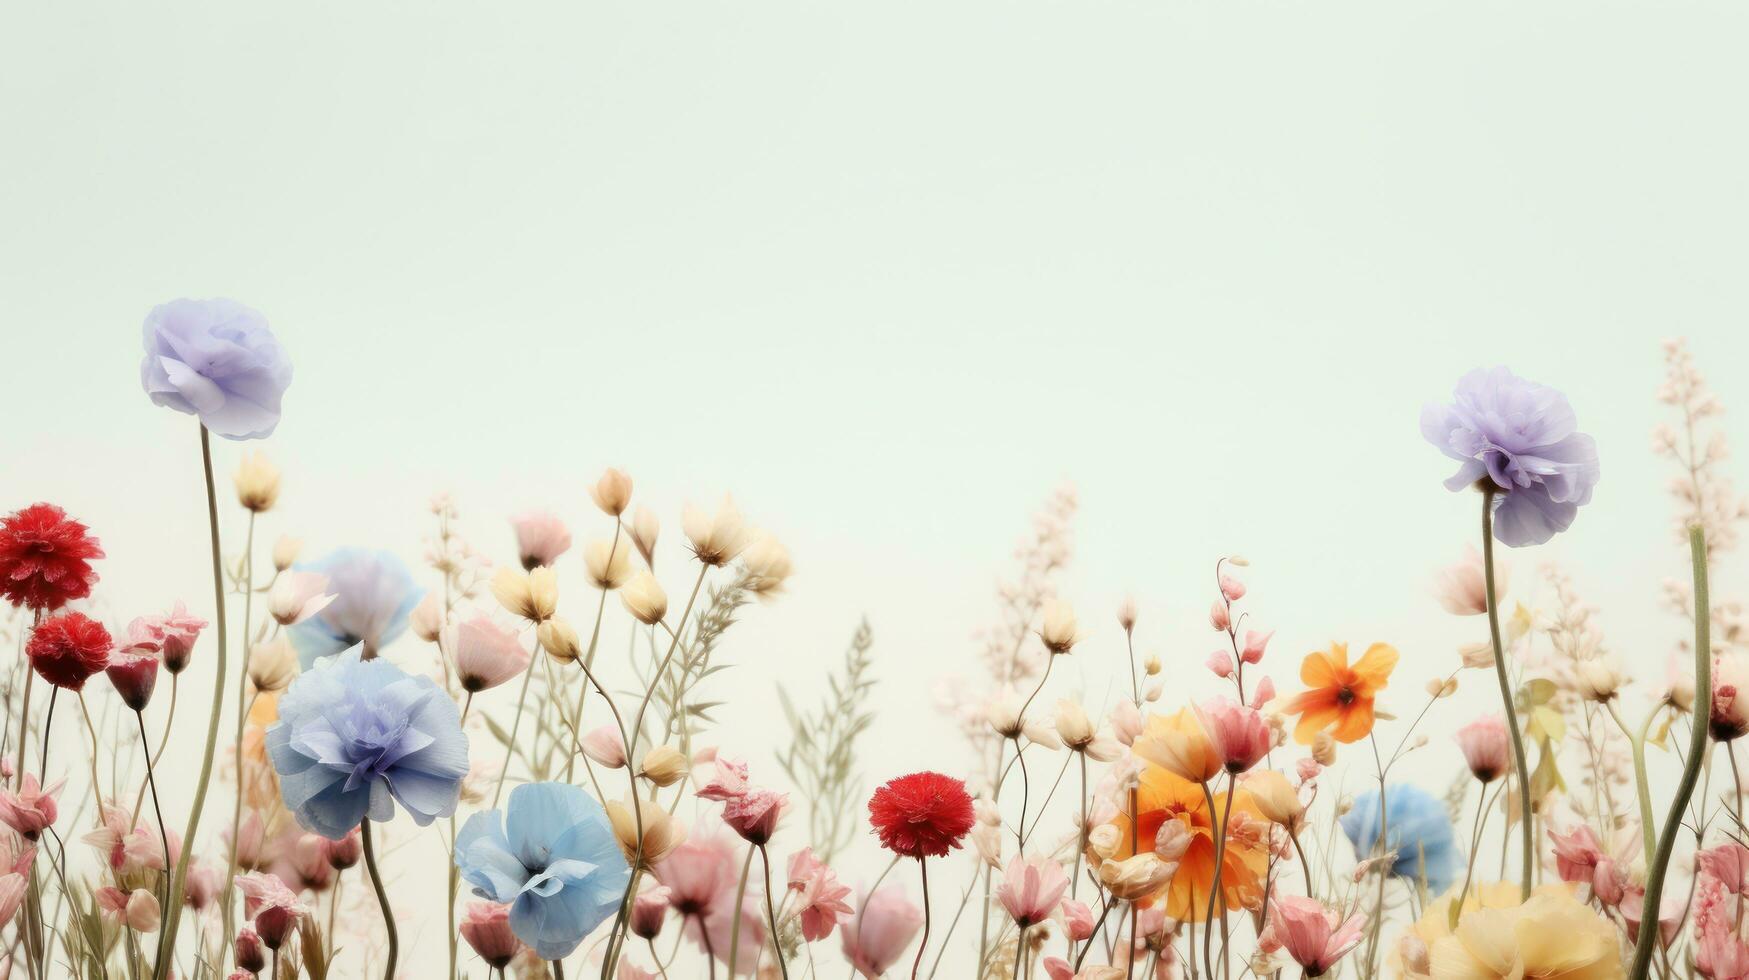 sauvage Prairie fleurs avec copie espace photo